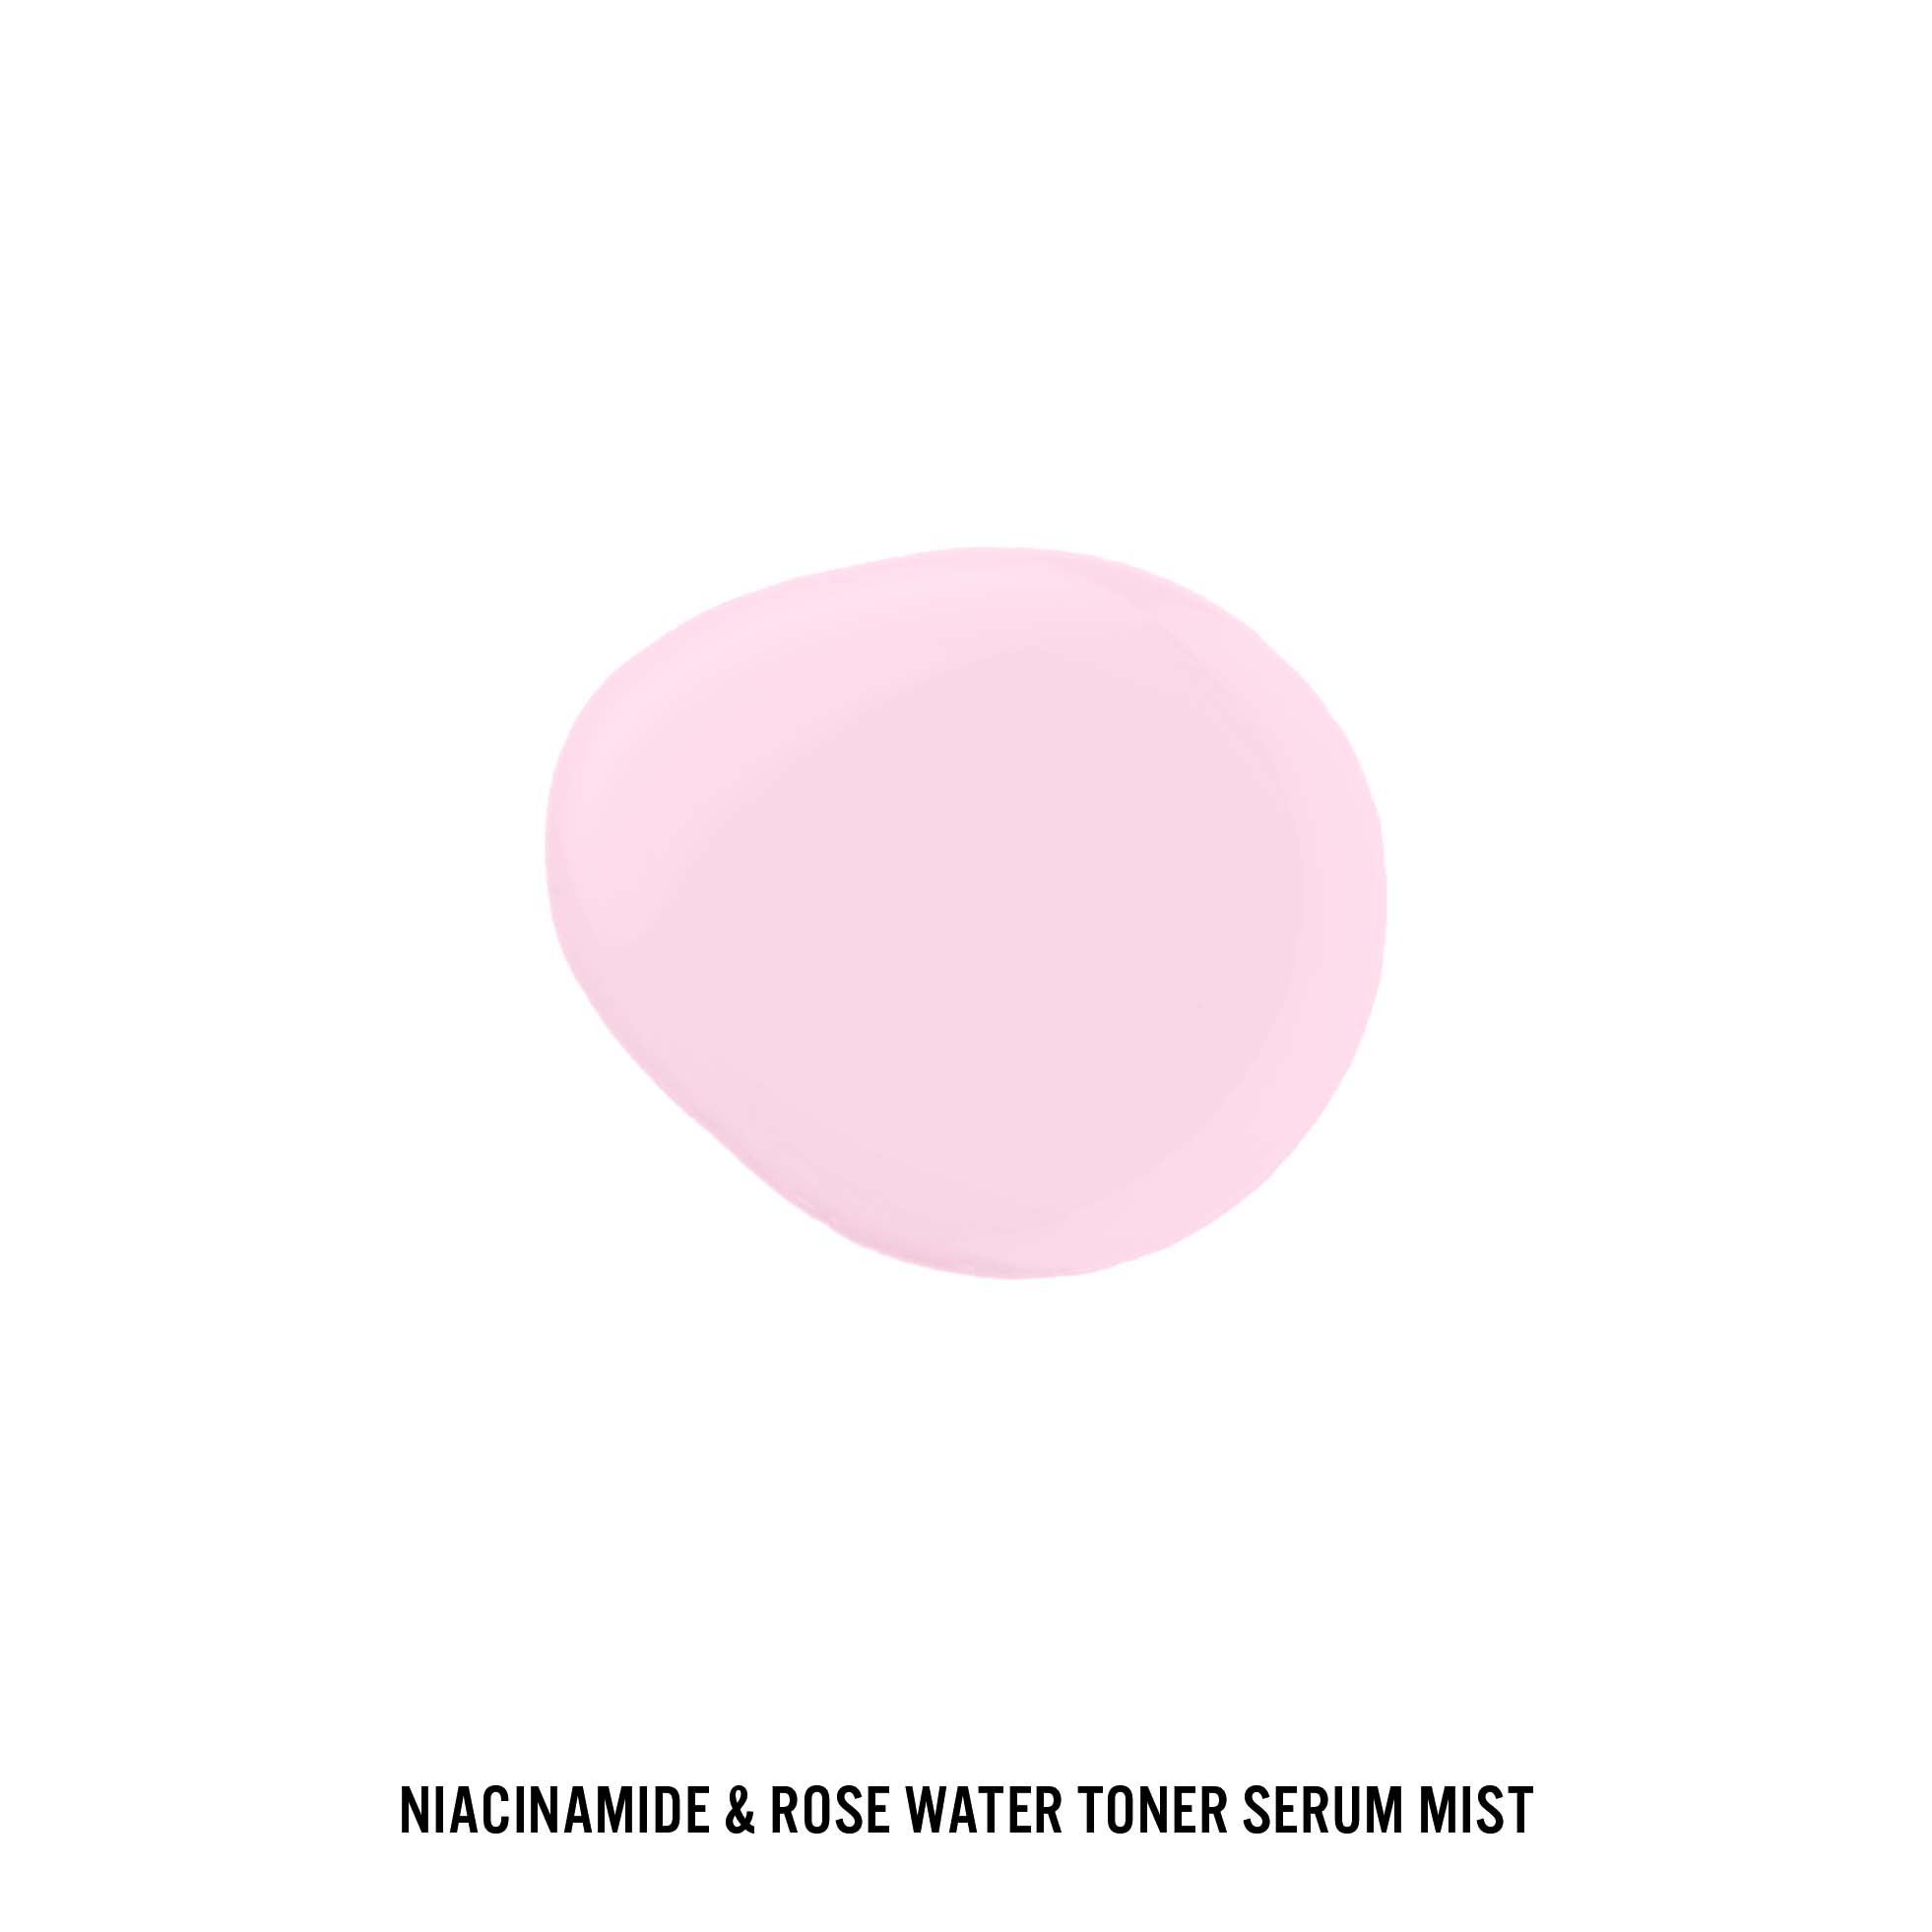 NIACINAMIDE & ROSE WATER TONER SERUM MIST